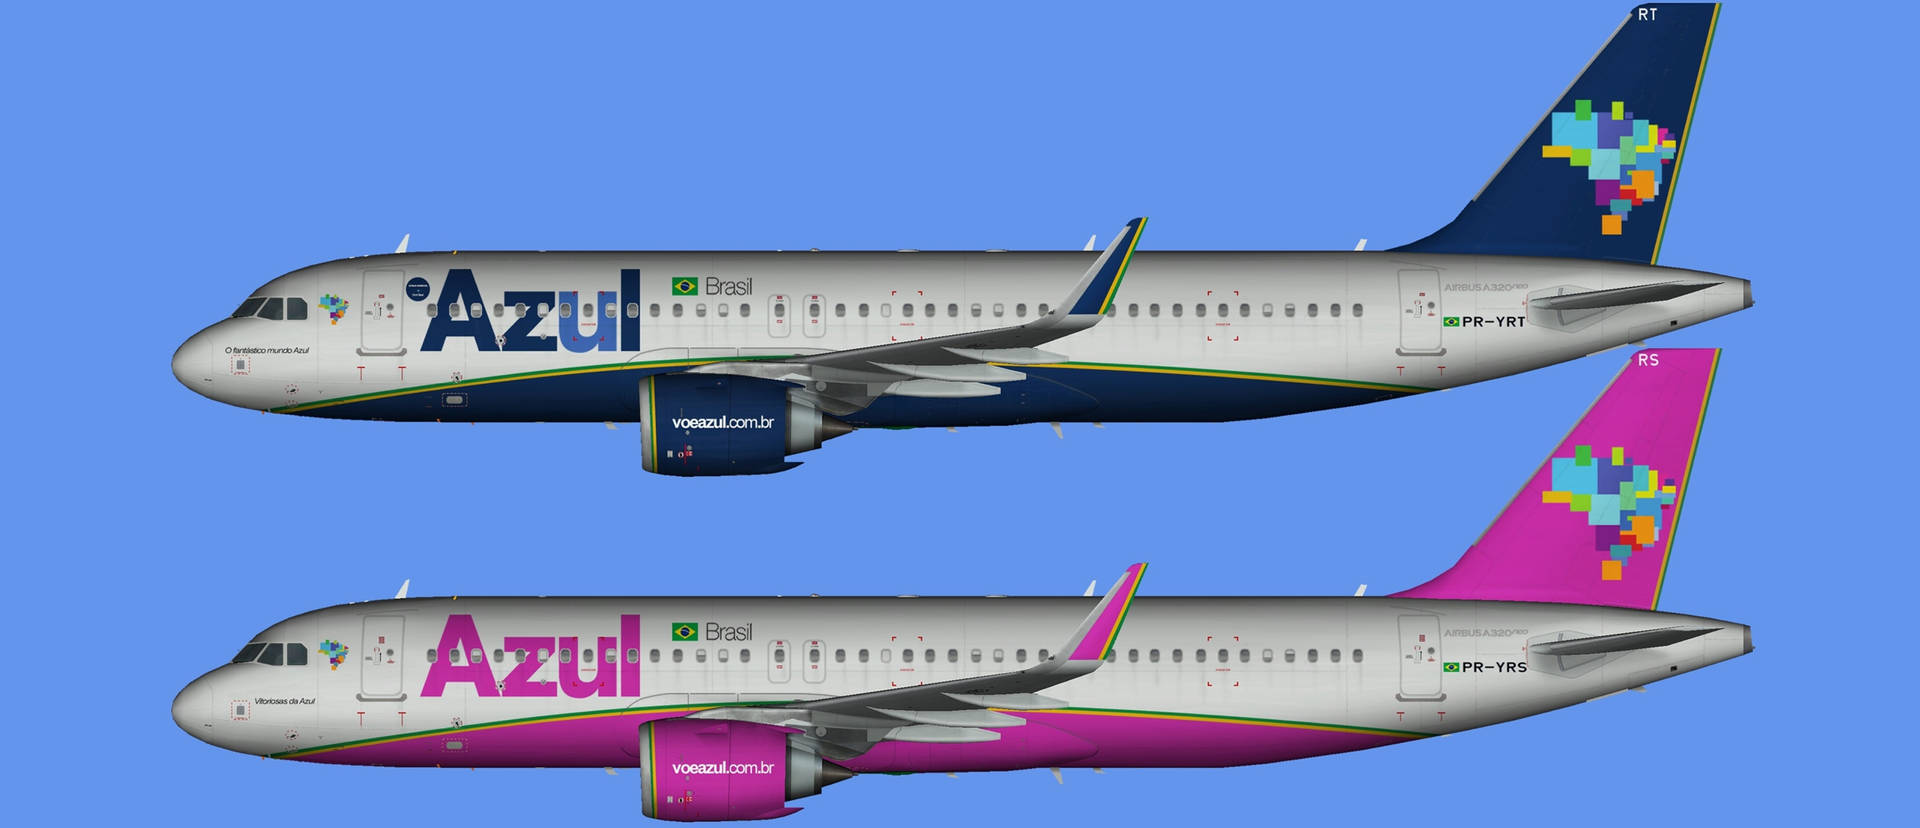 Azul Airlines' Beautiful Pink Jet In Sky Wallpaper